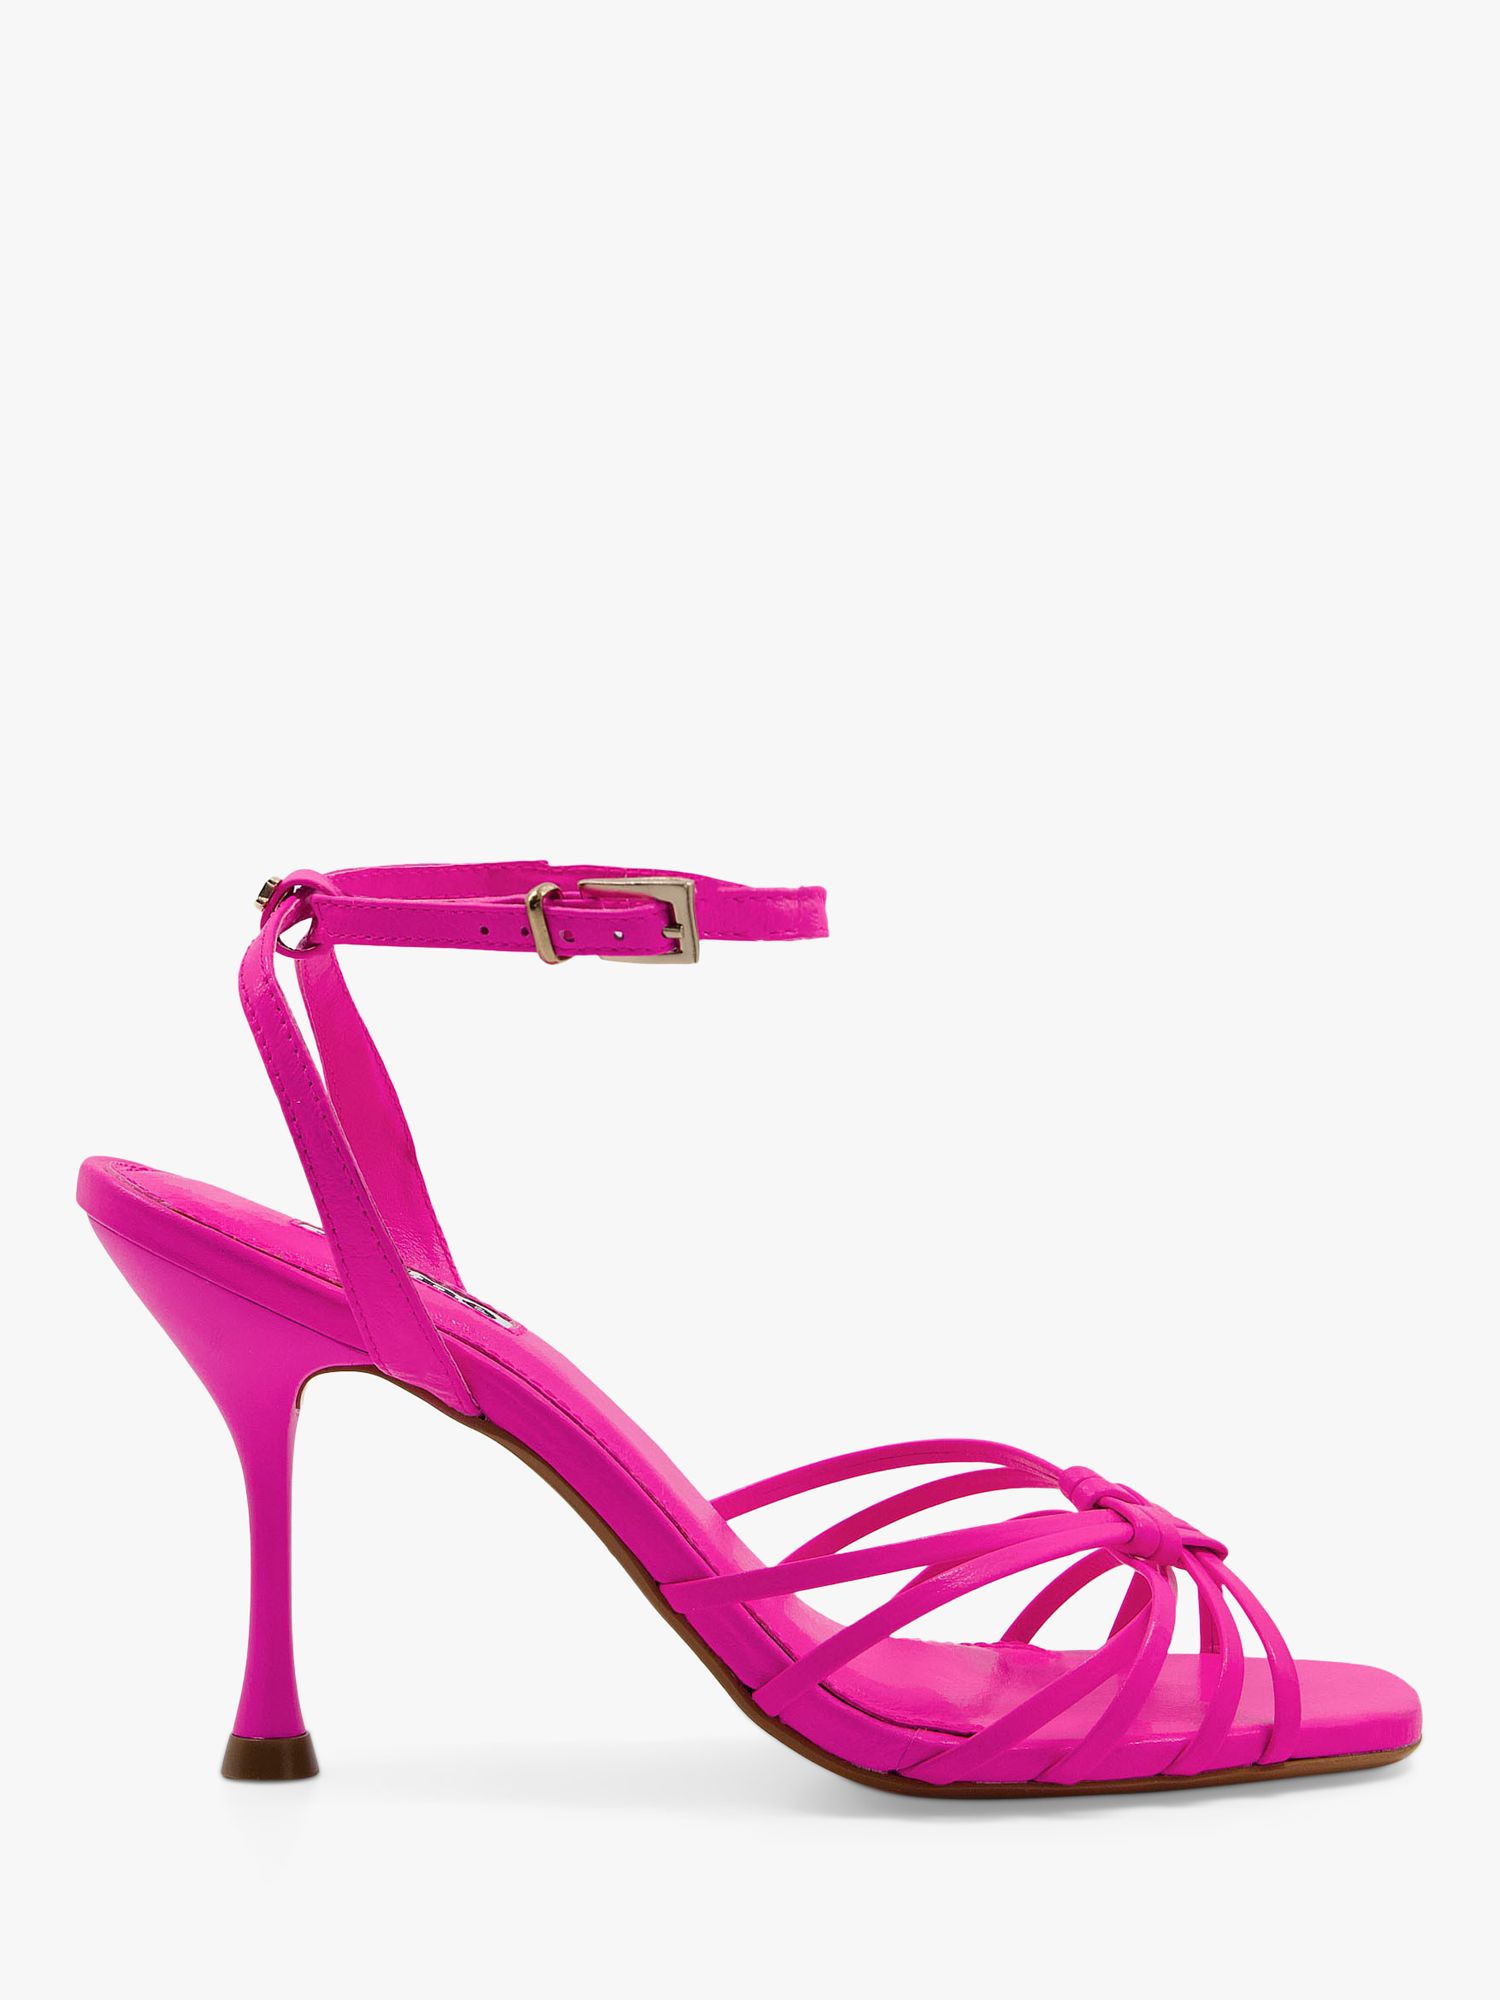 Carvela Kurt Geiger Synthetic Womens Heels Block Fuchsia Second Skin 50 in Pink Womens Shoes Heels Sandal heels 